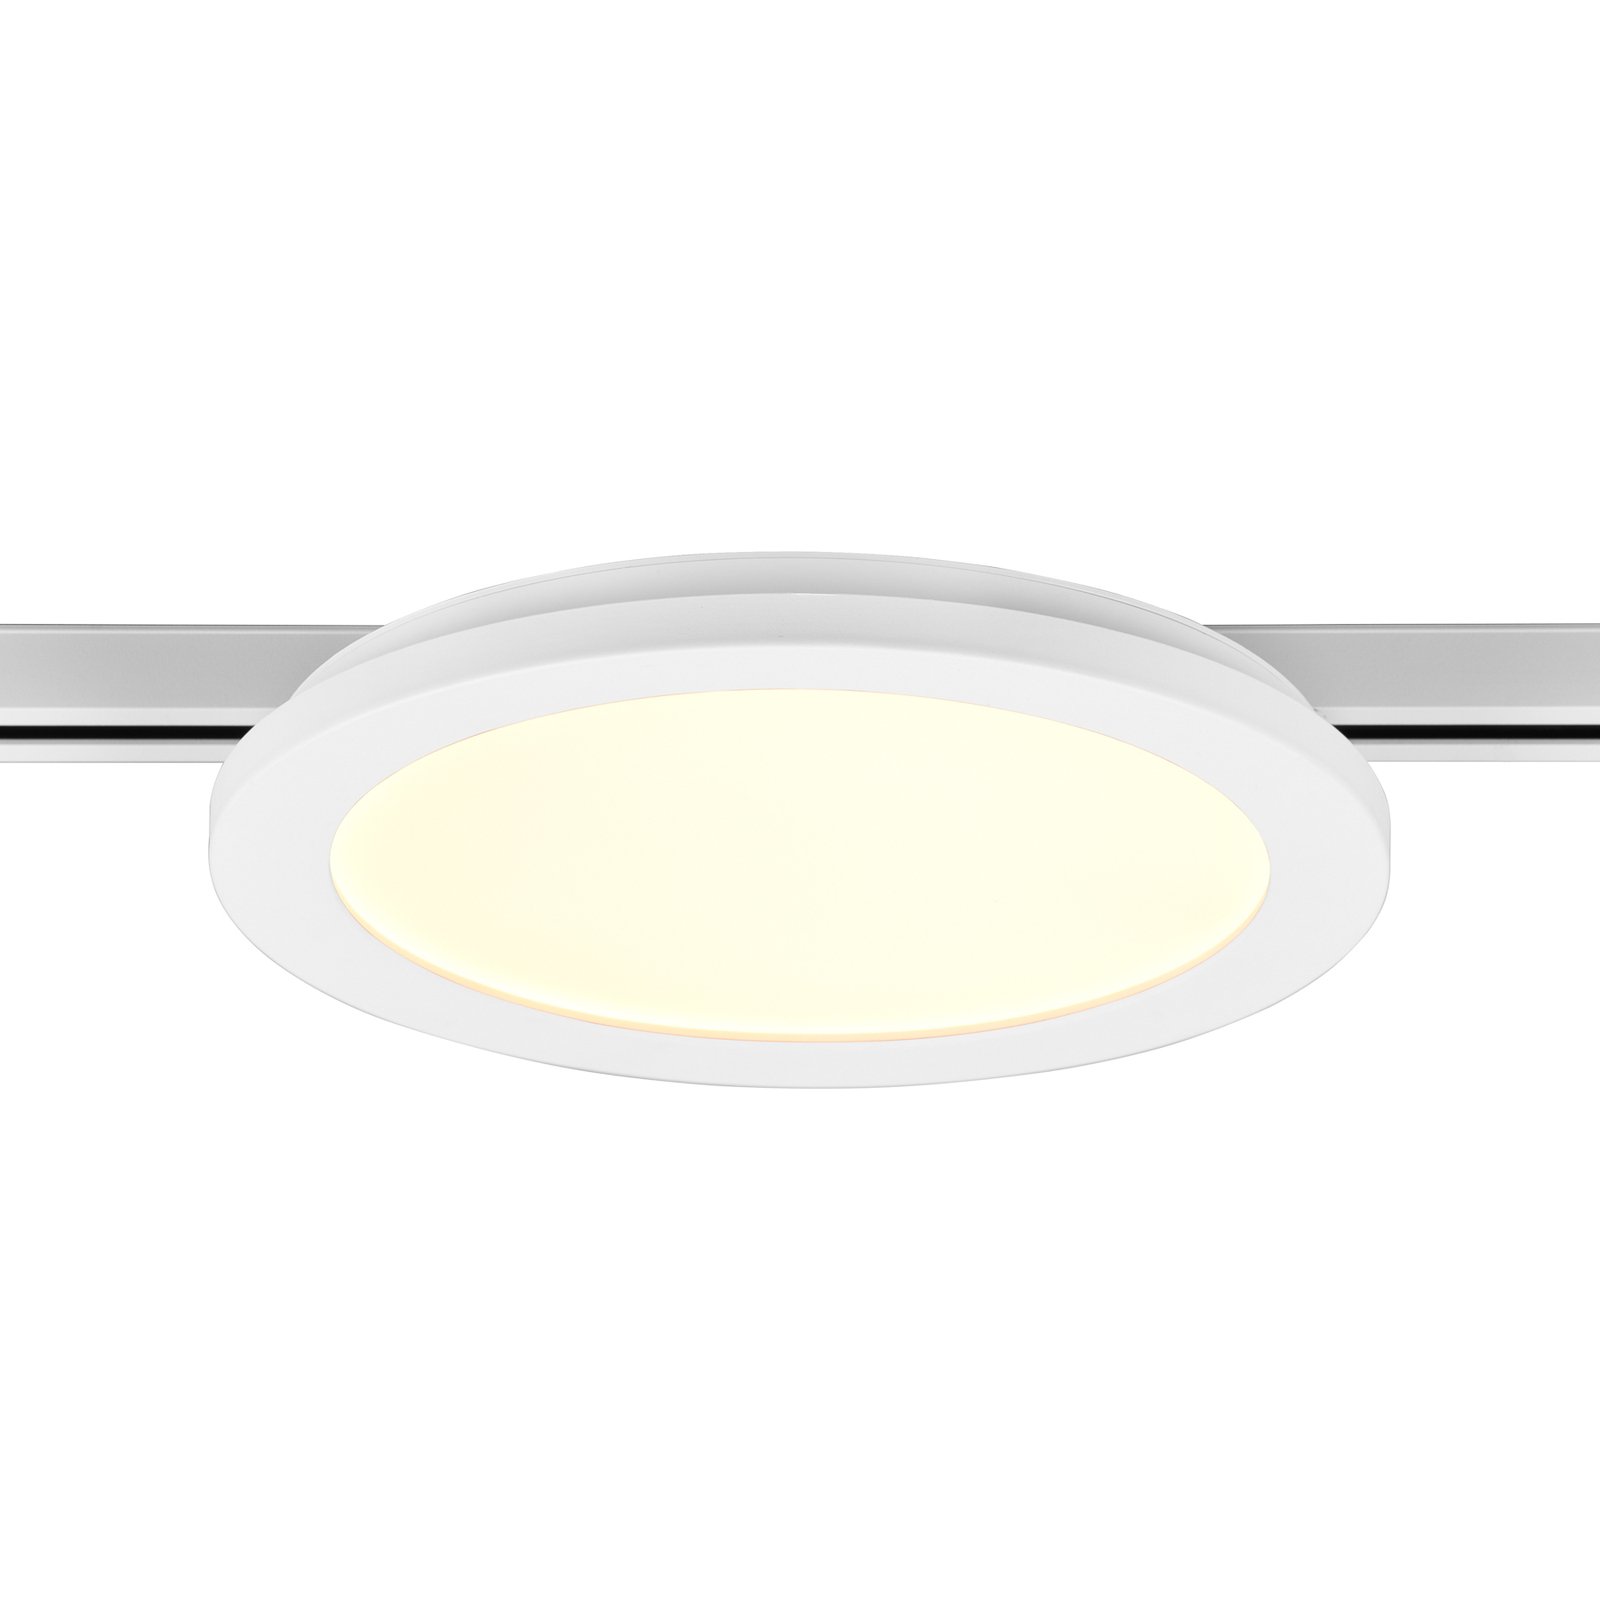 LED plafondlamp Camillus DUOline, Ø 26 cm, wit